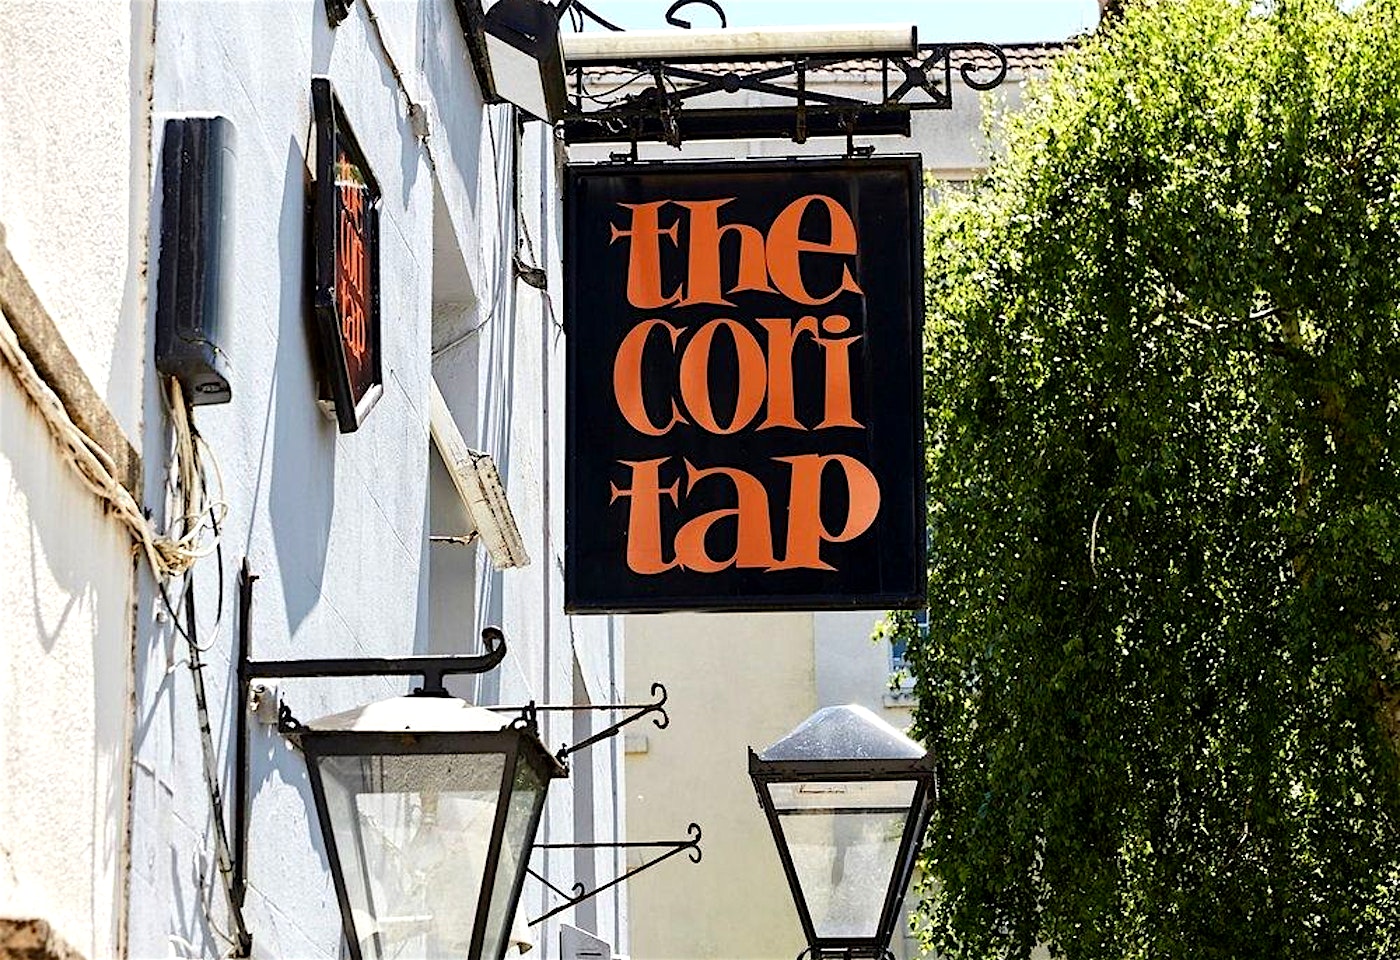 Coronation tap Clifton pub